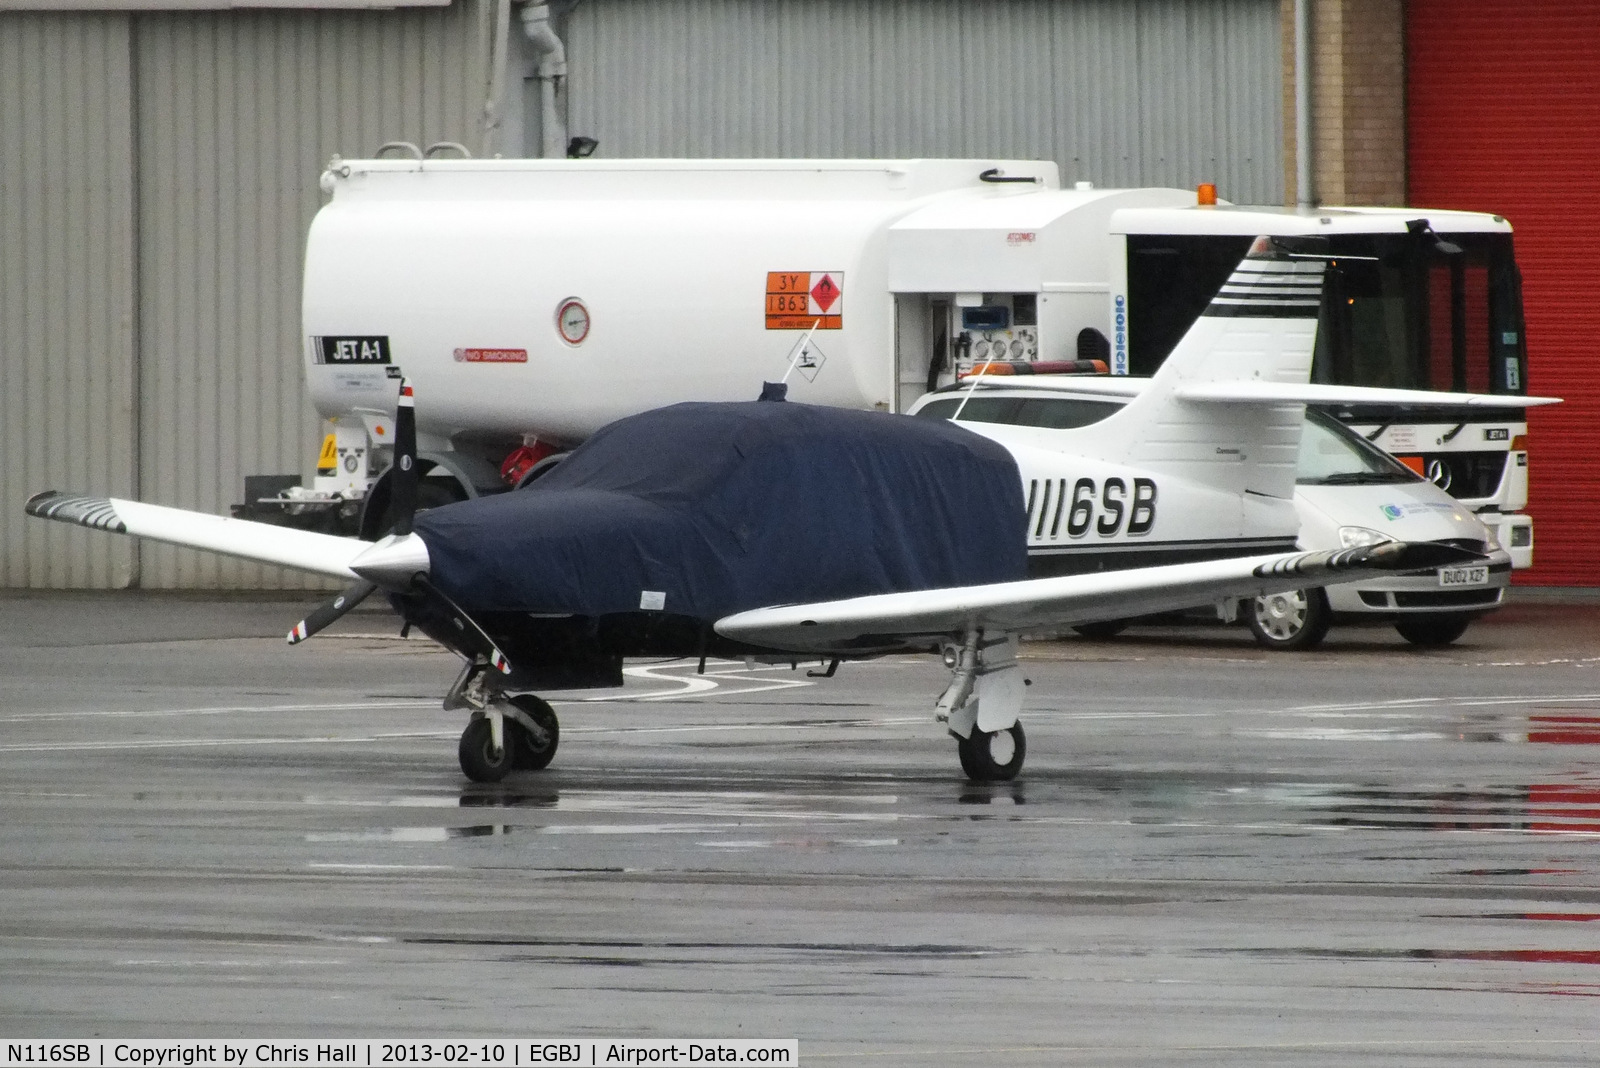 N116SB, 2000 Rockwell Commander 114B C/N 14678, at Gloucestershire Airport